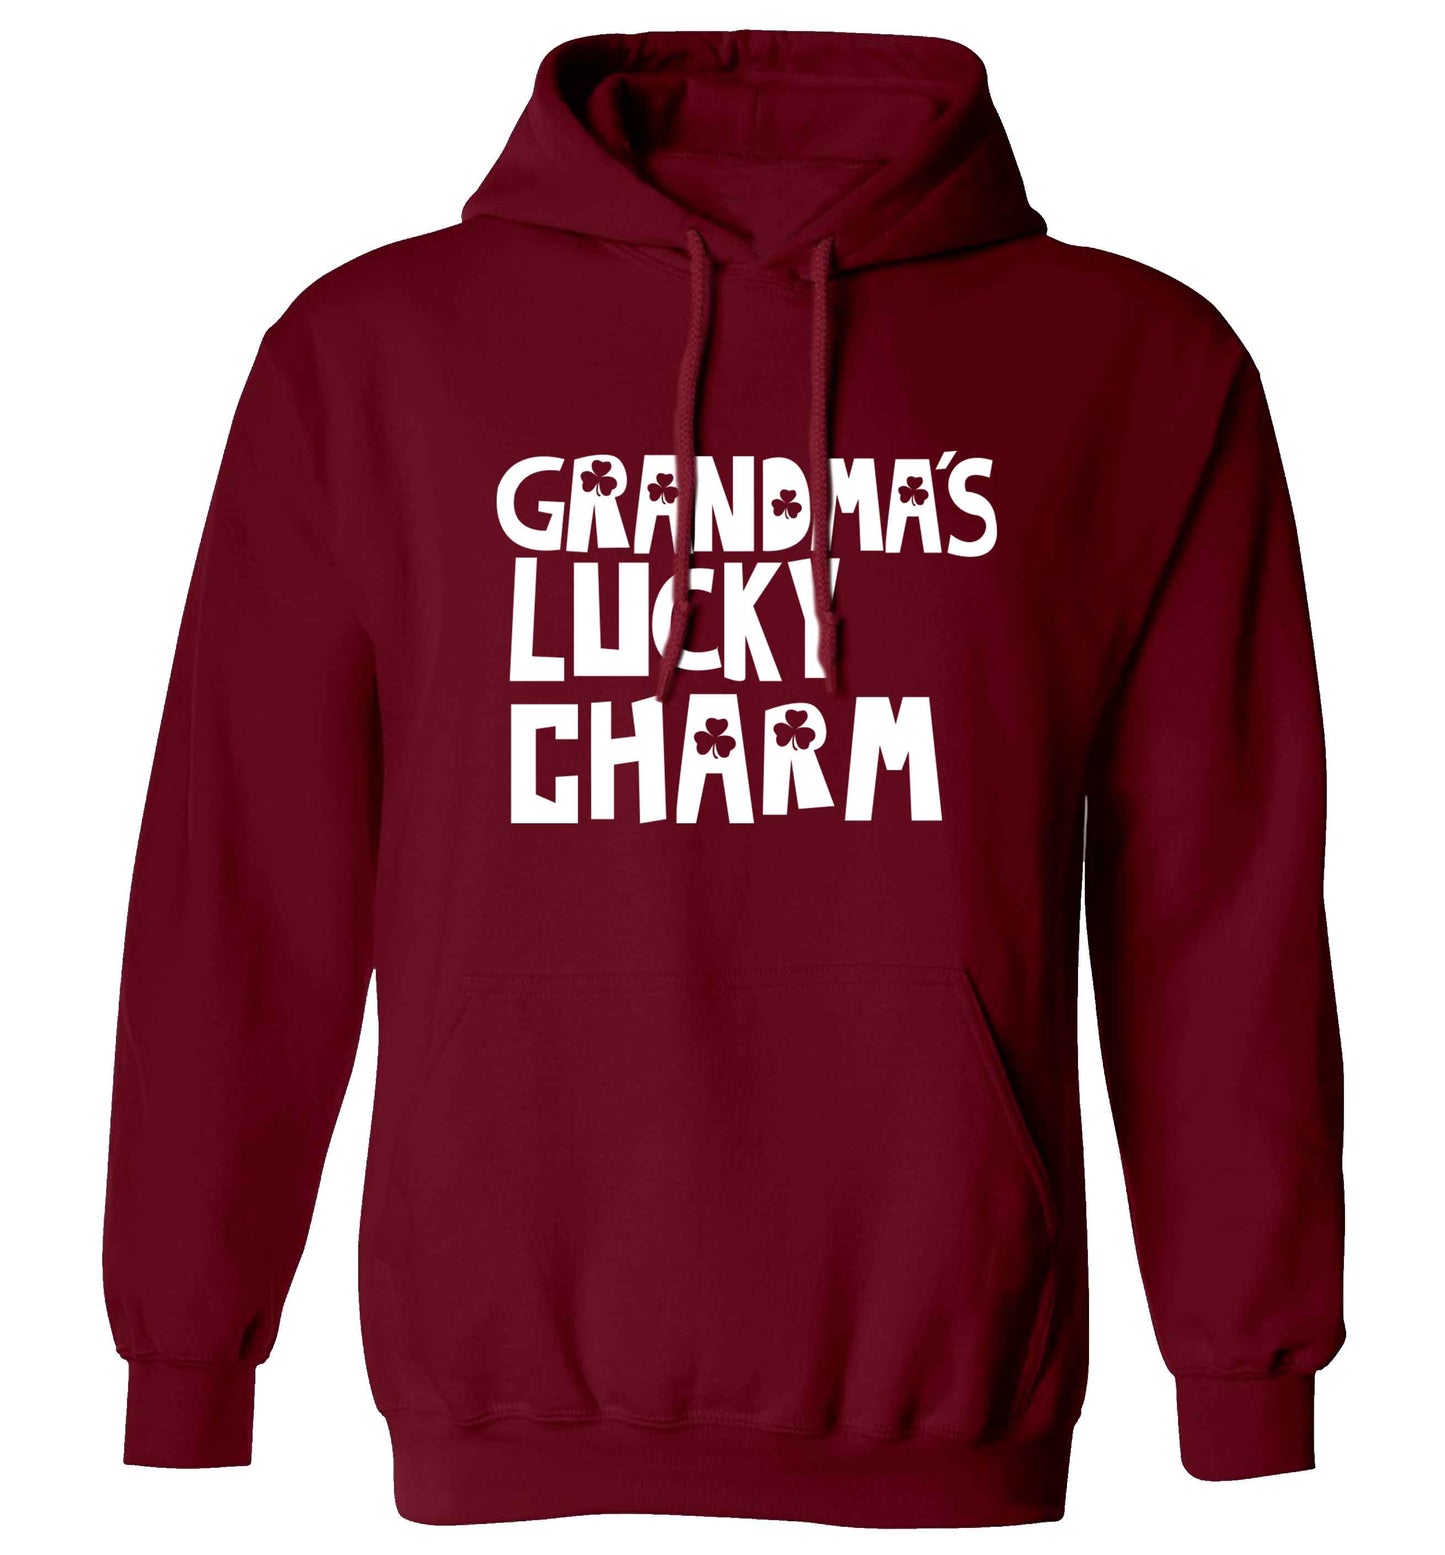 Grandma's lucky charm adults unisex maroon hoodie 2XL